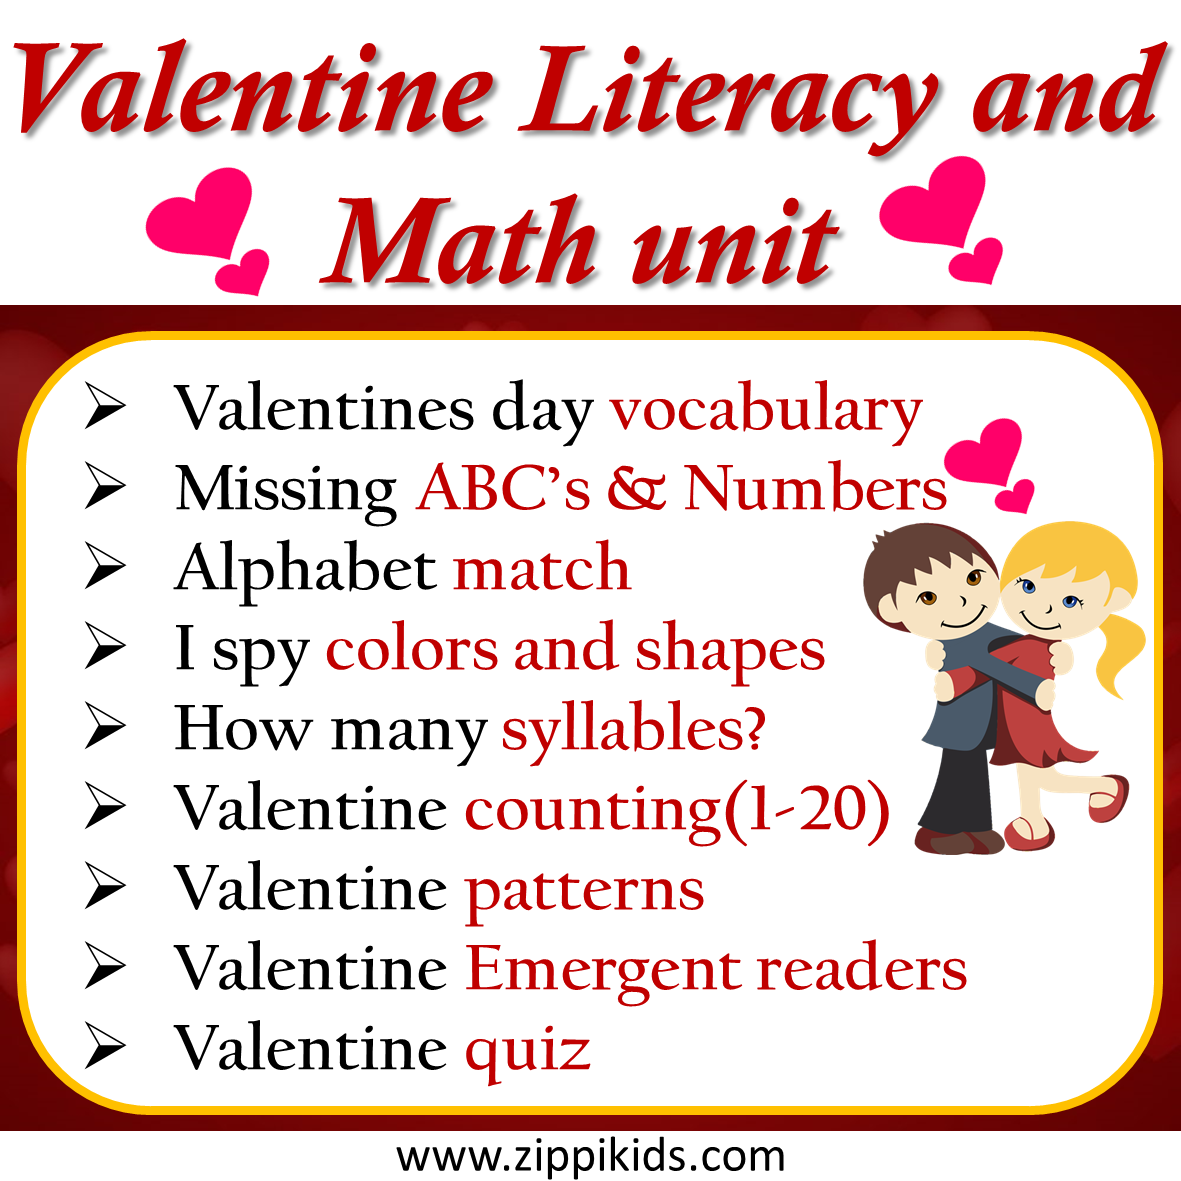 Valentine's Day Literacy and Math unit - 73 Google Slides/PowerPoint